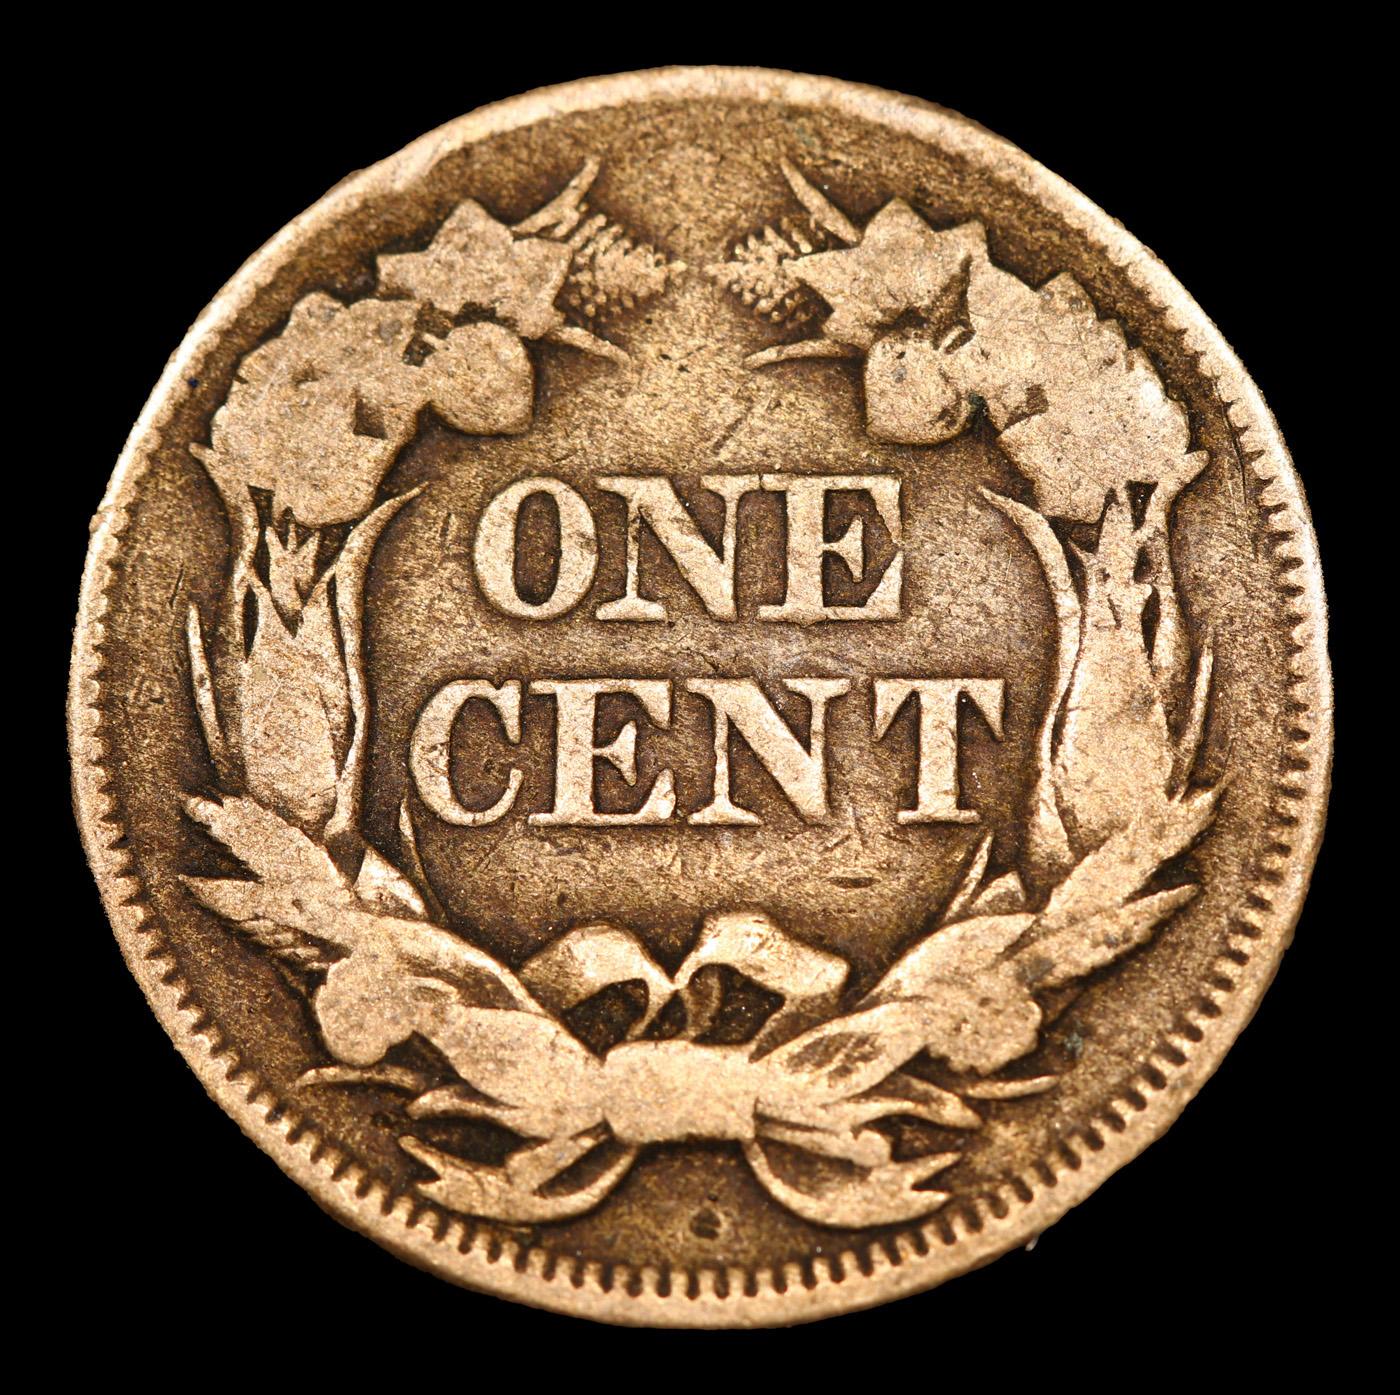 1857 Flying Eagle Cent 1c Grades vf+